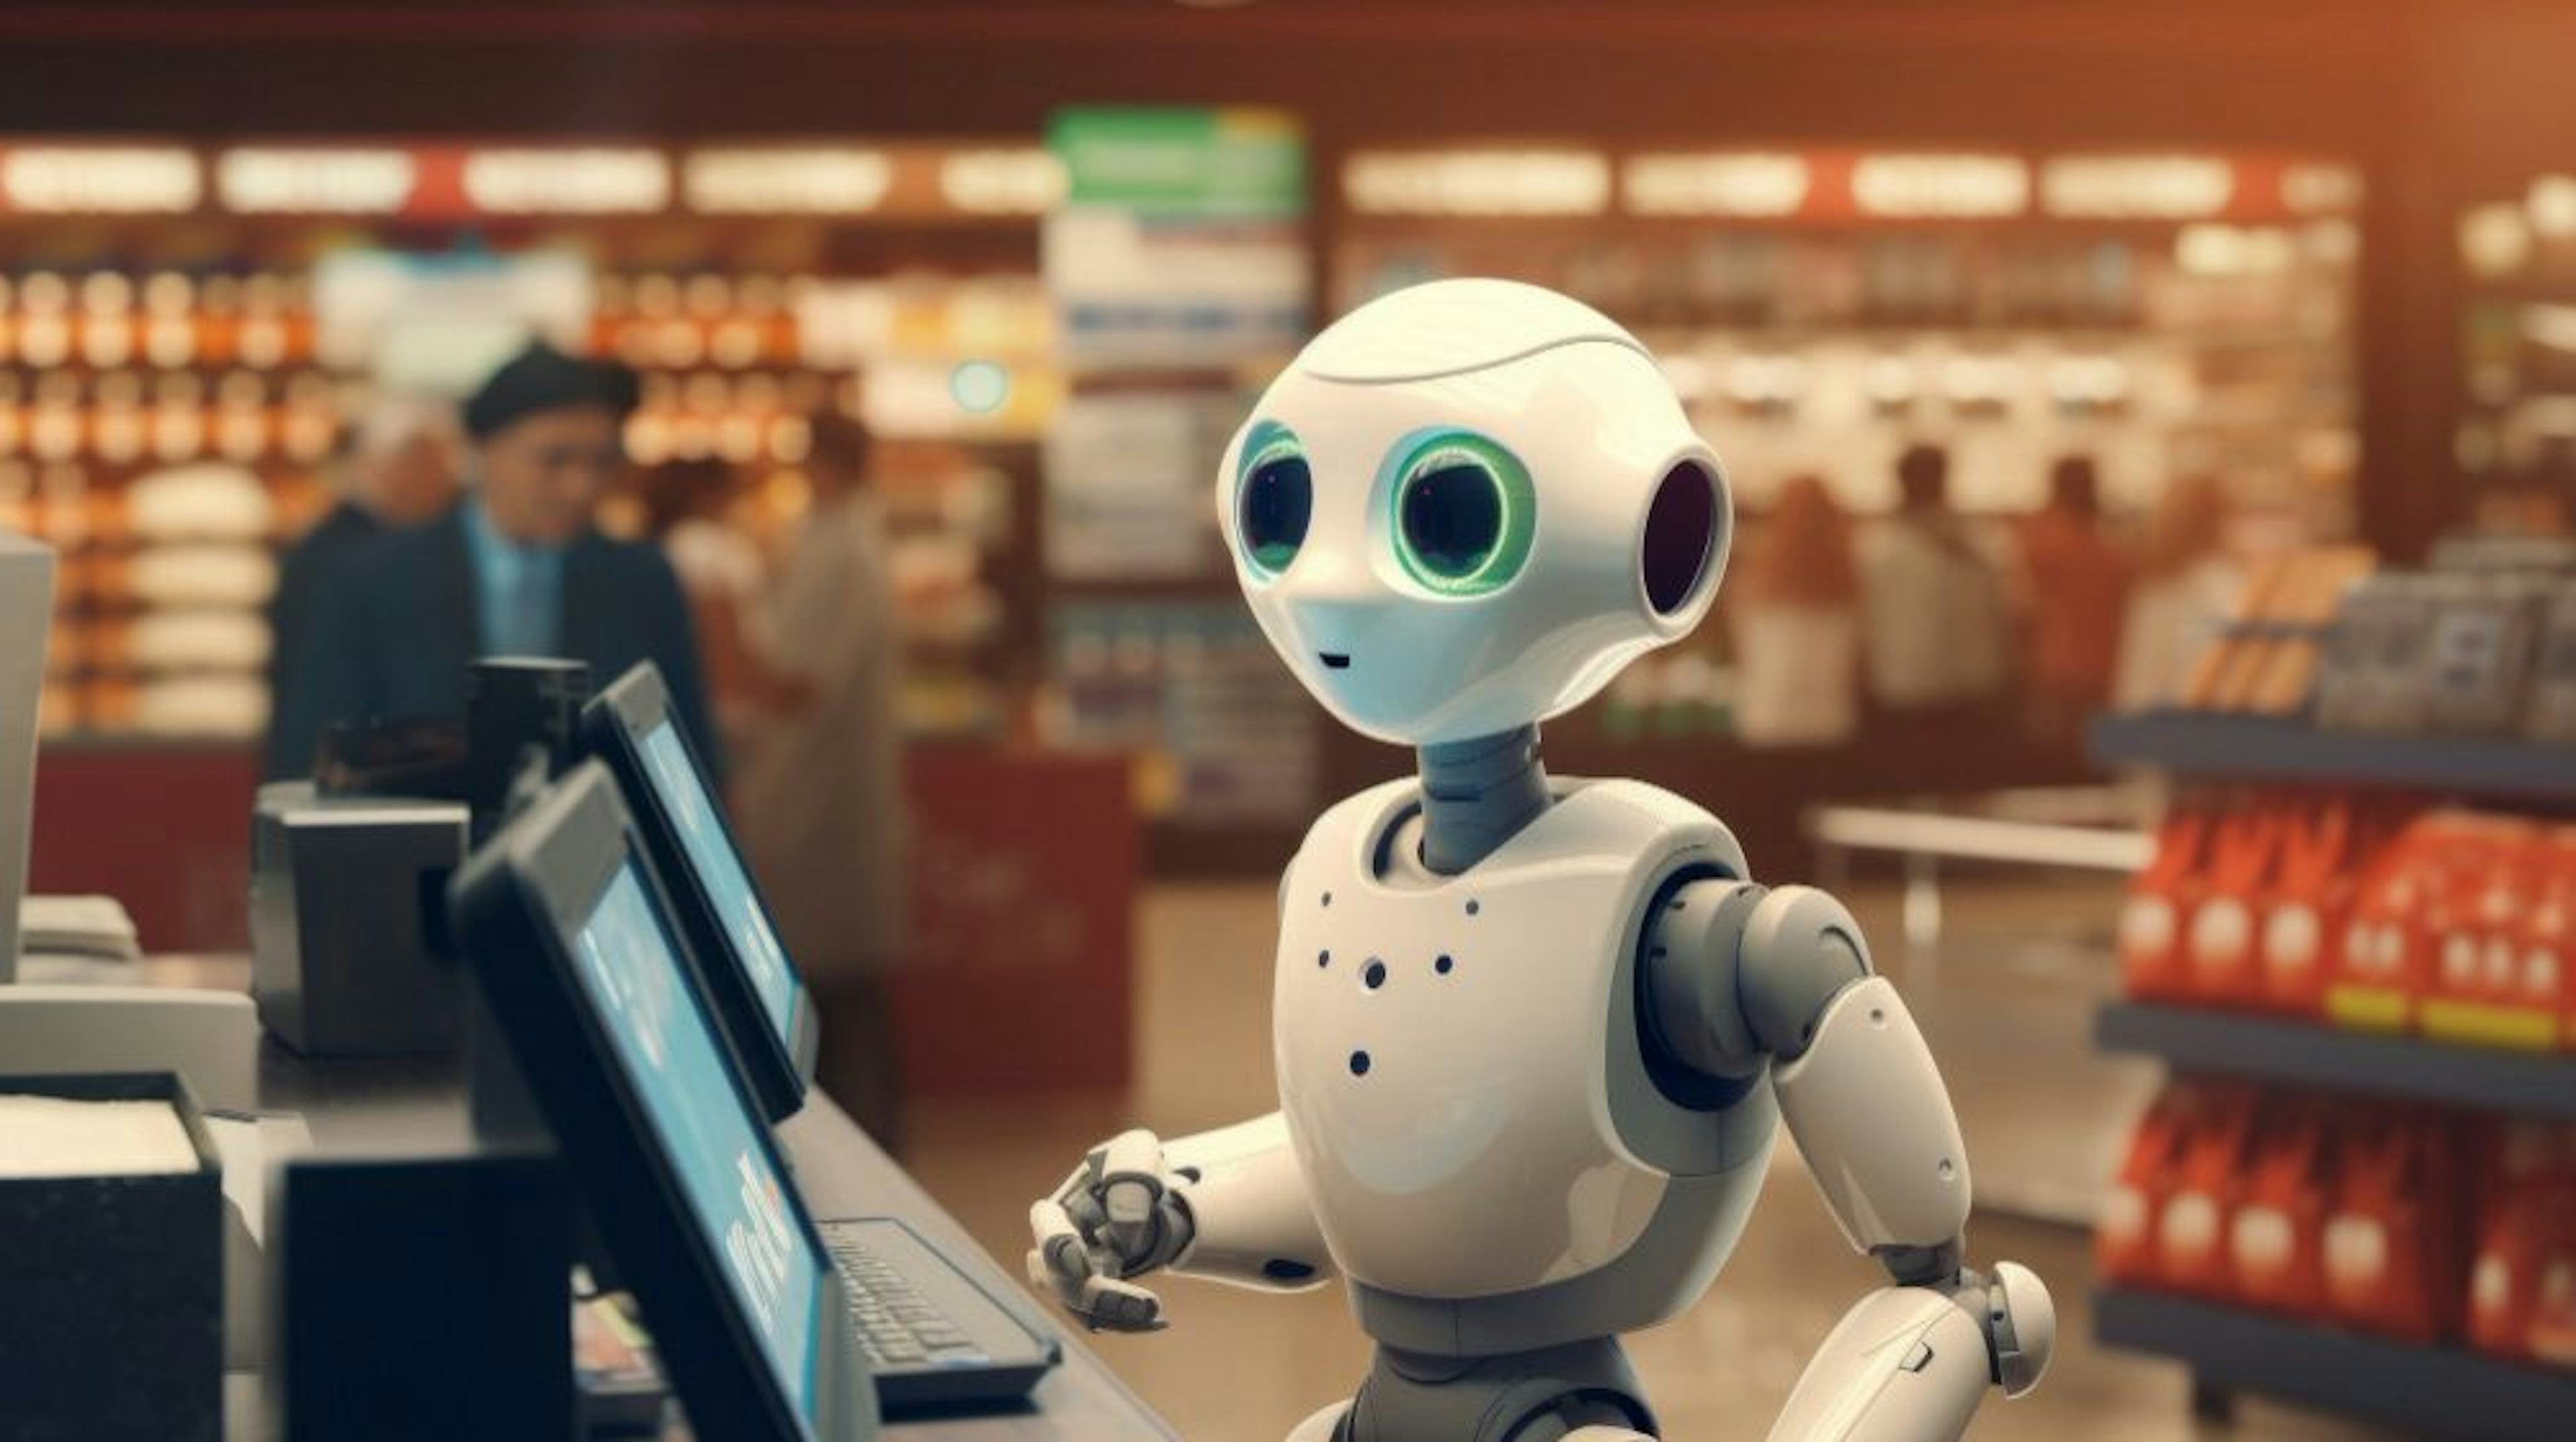 Robot cashier at supermarket checkout